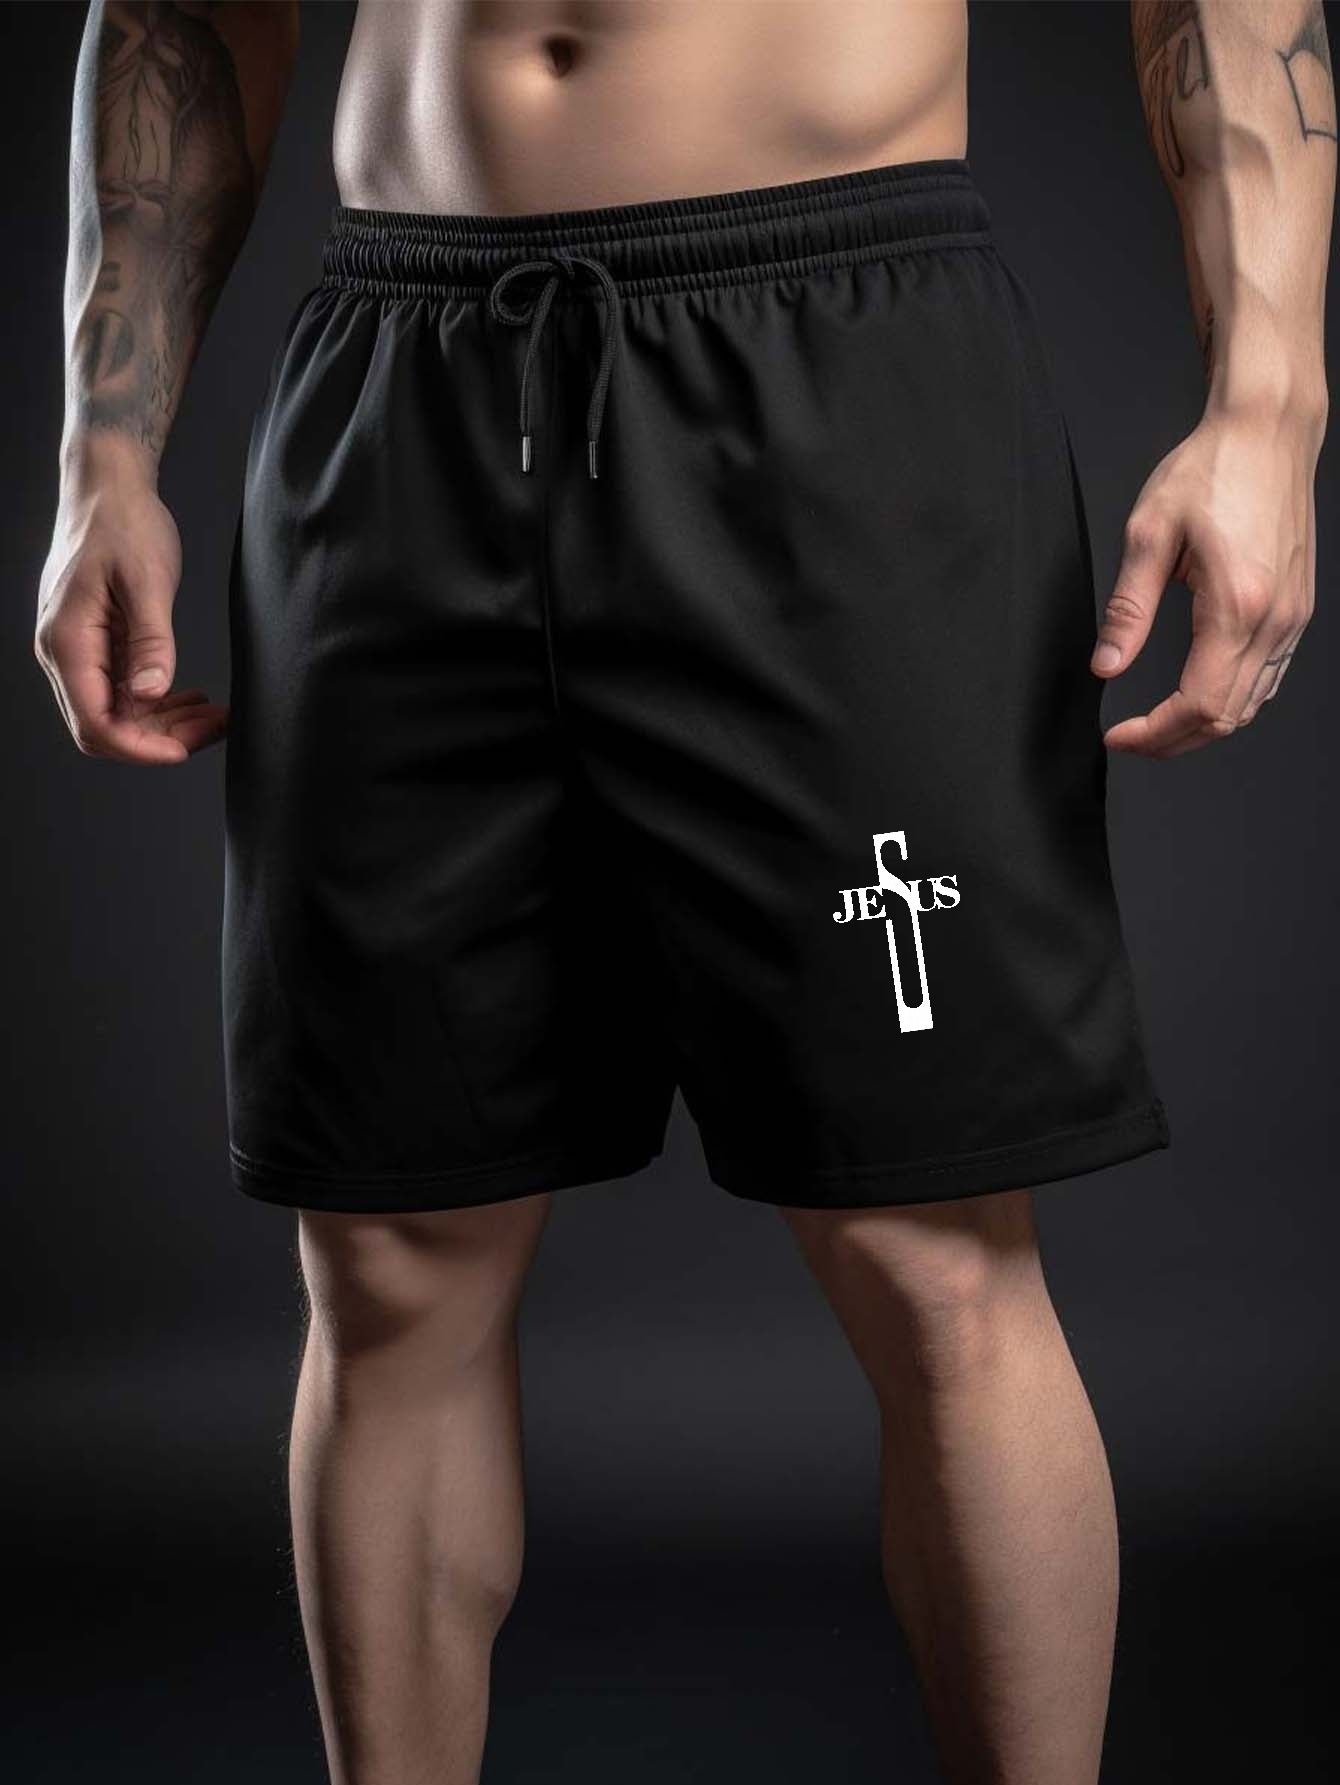 JESUS CROSS Plus Size Men's Christian Shorts claimedbygoddesigns